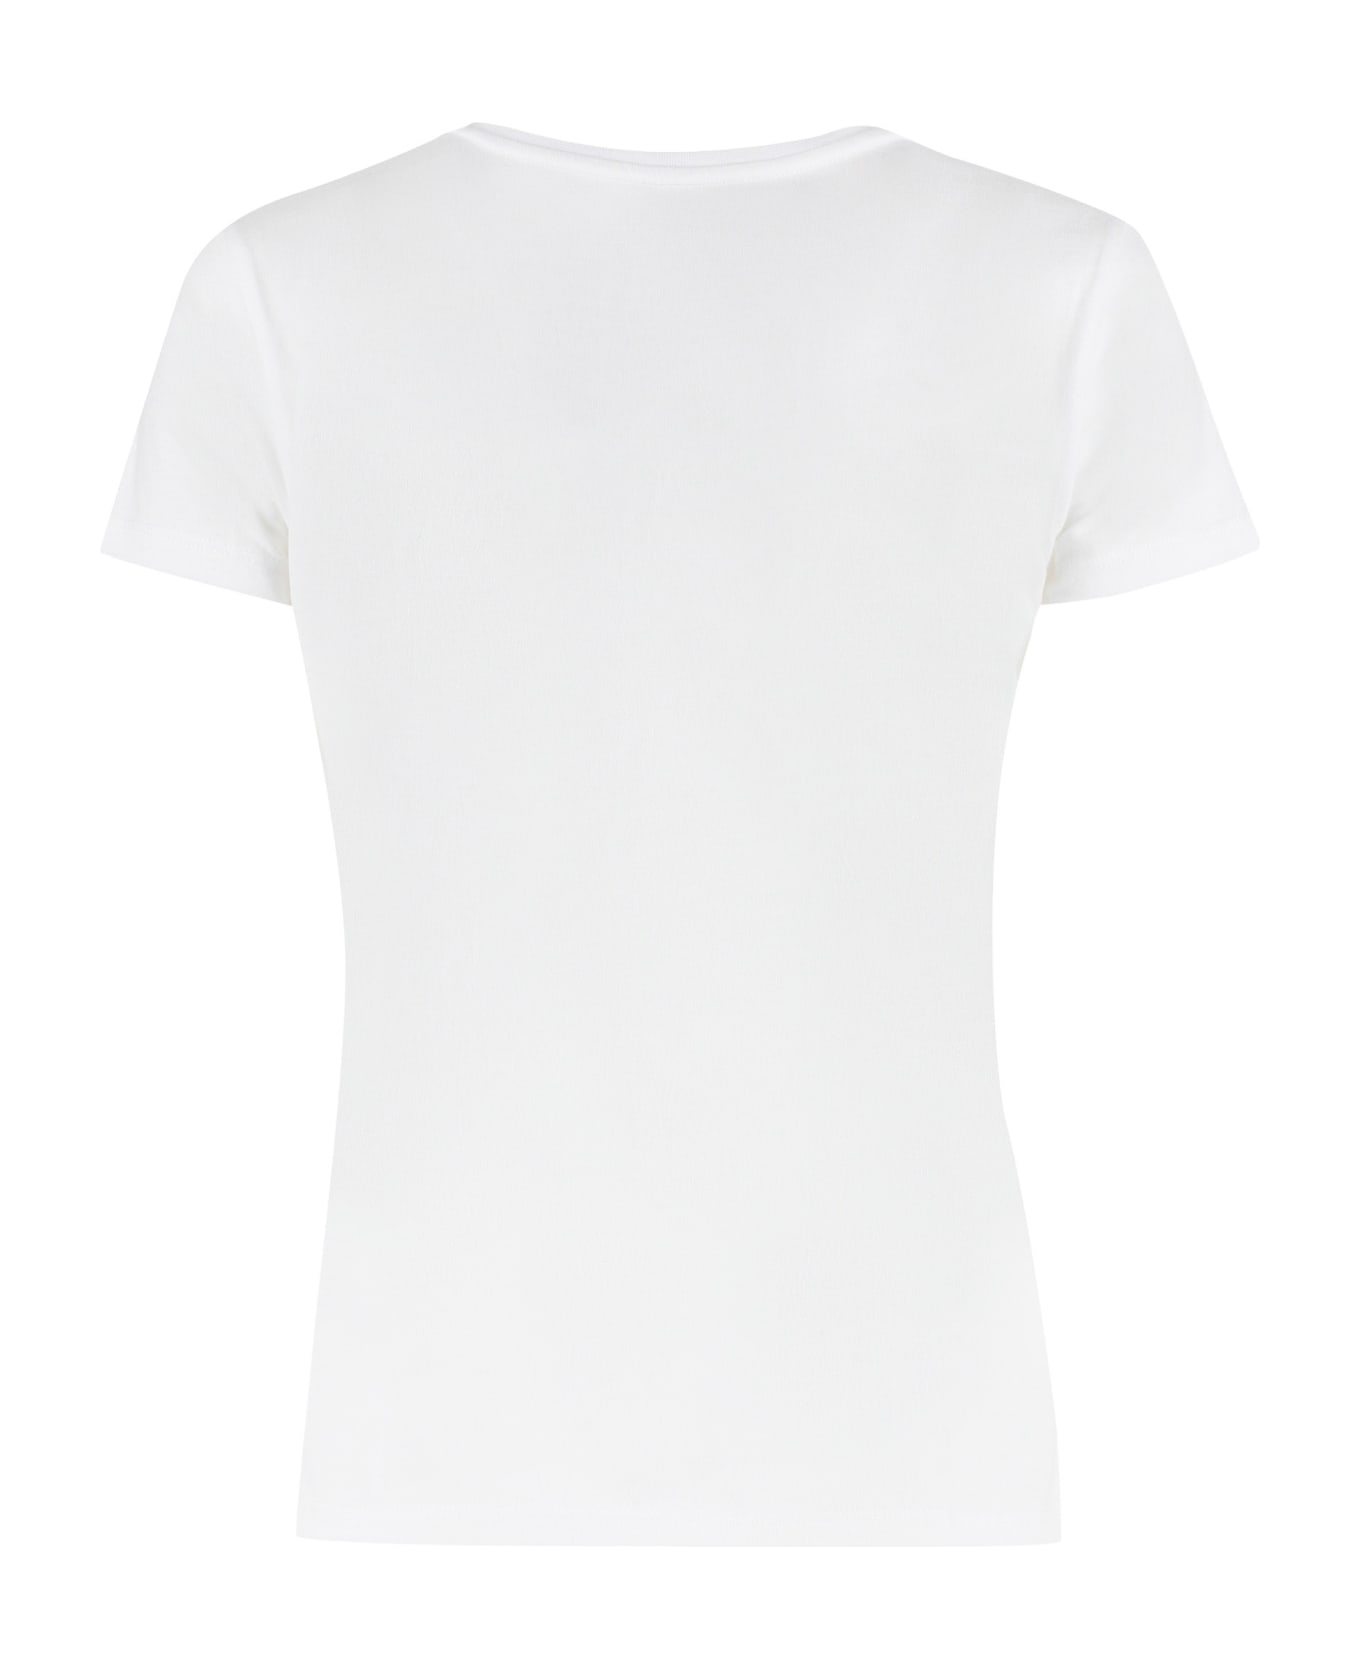 Majestic Filatures Printed Cotton T-shirt - White